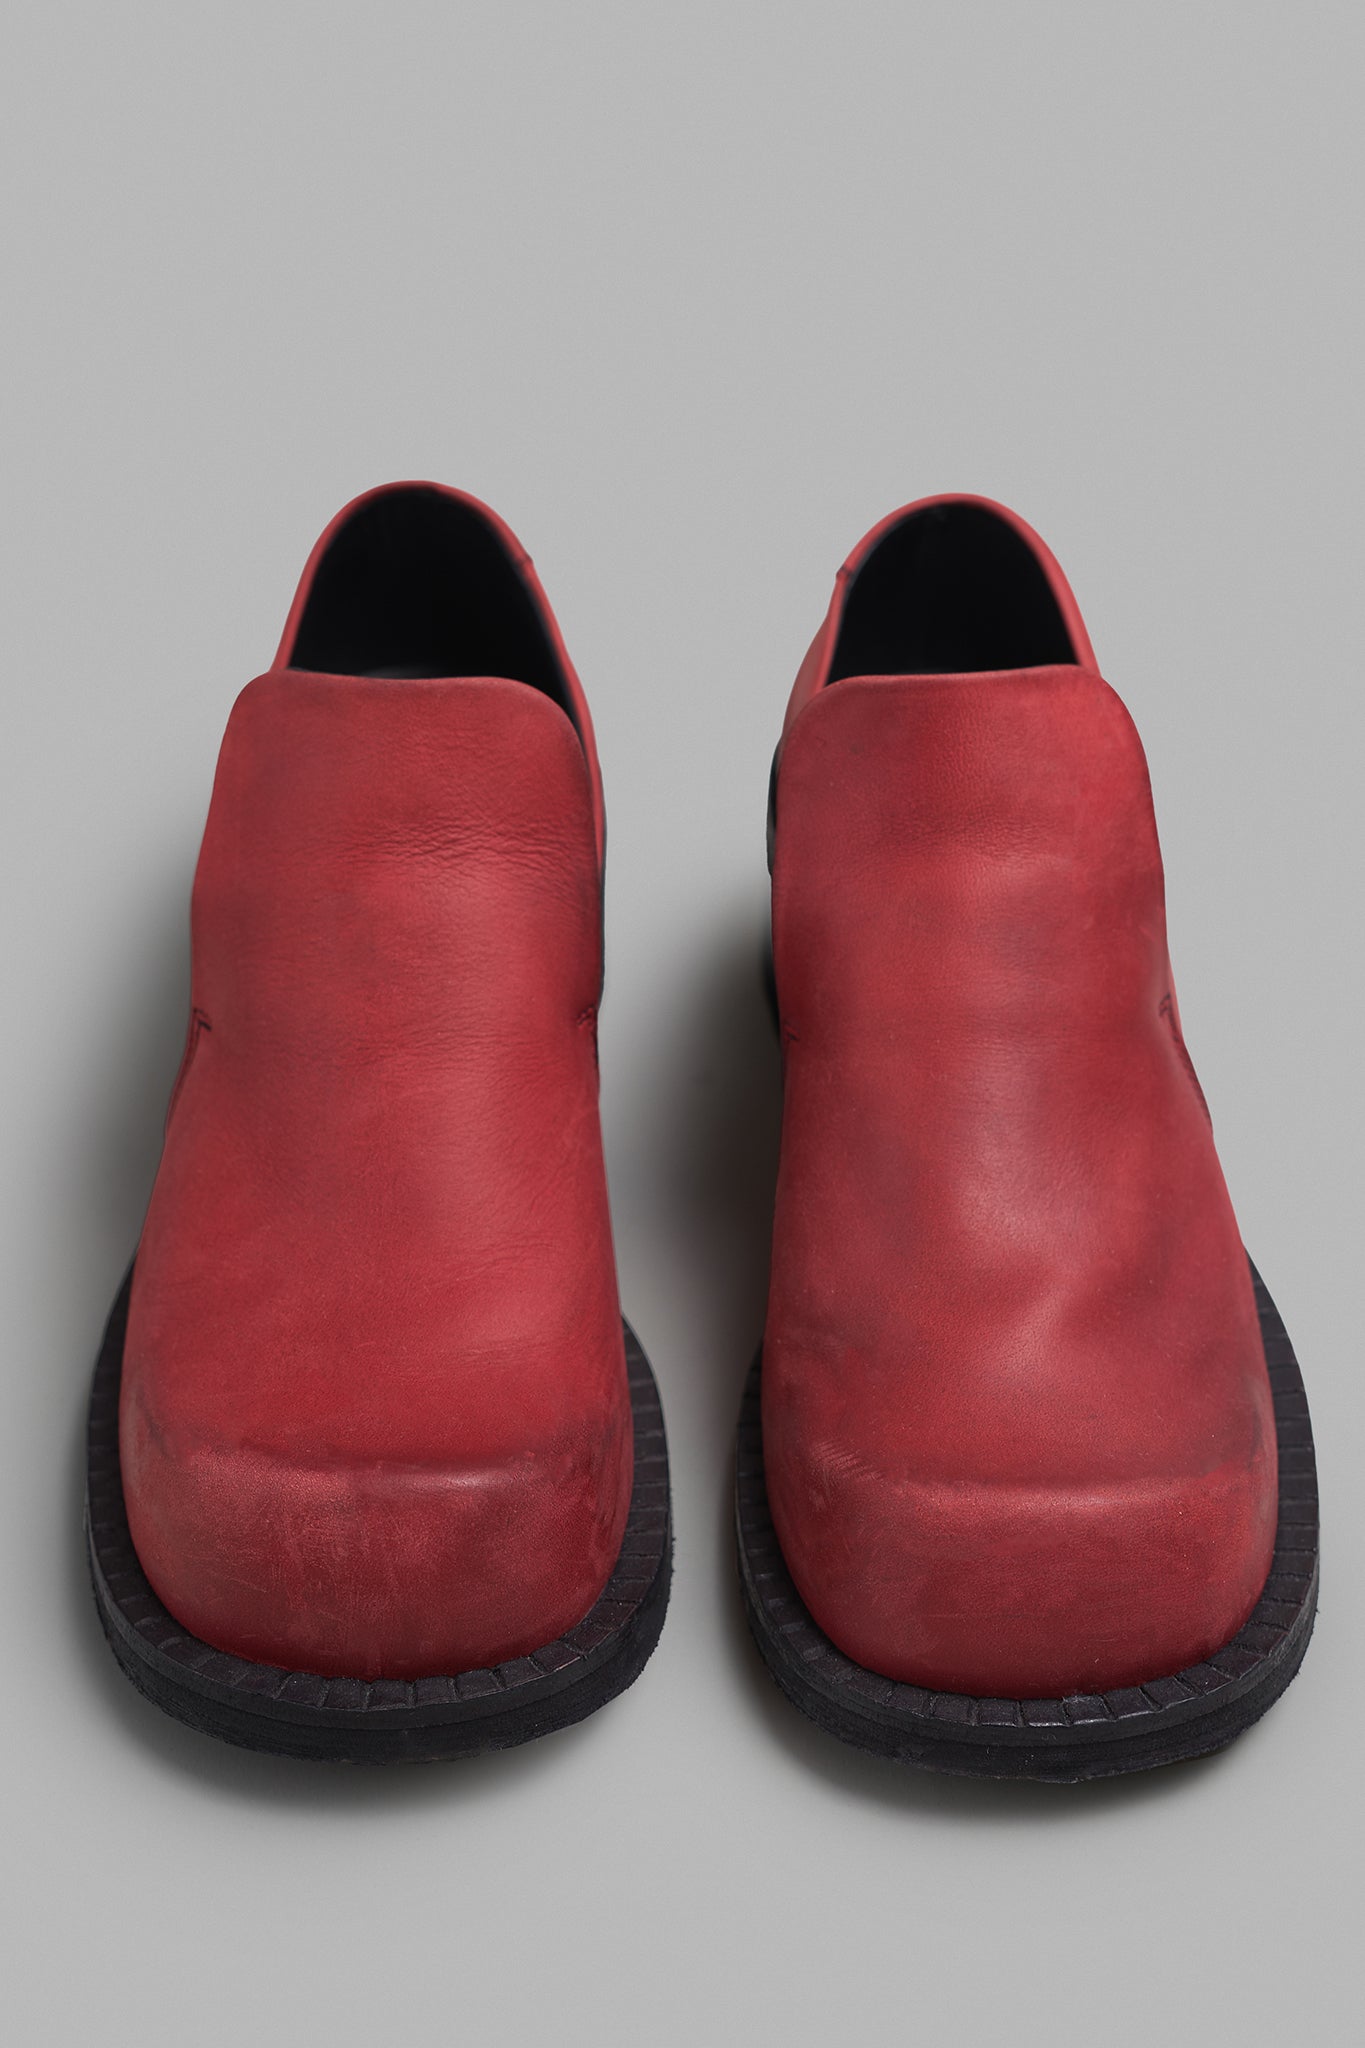 Wide Toe Loafer - Old Red